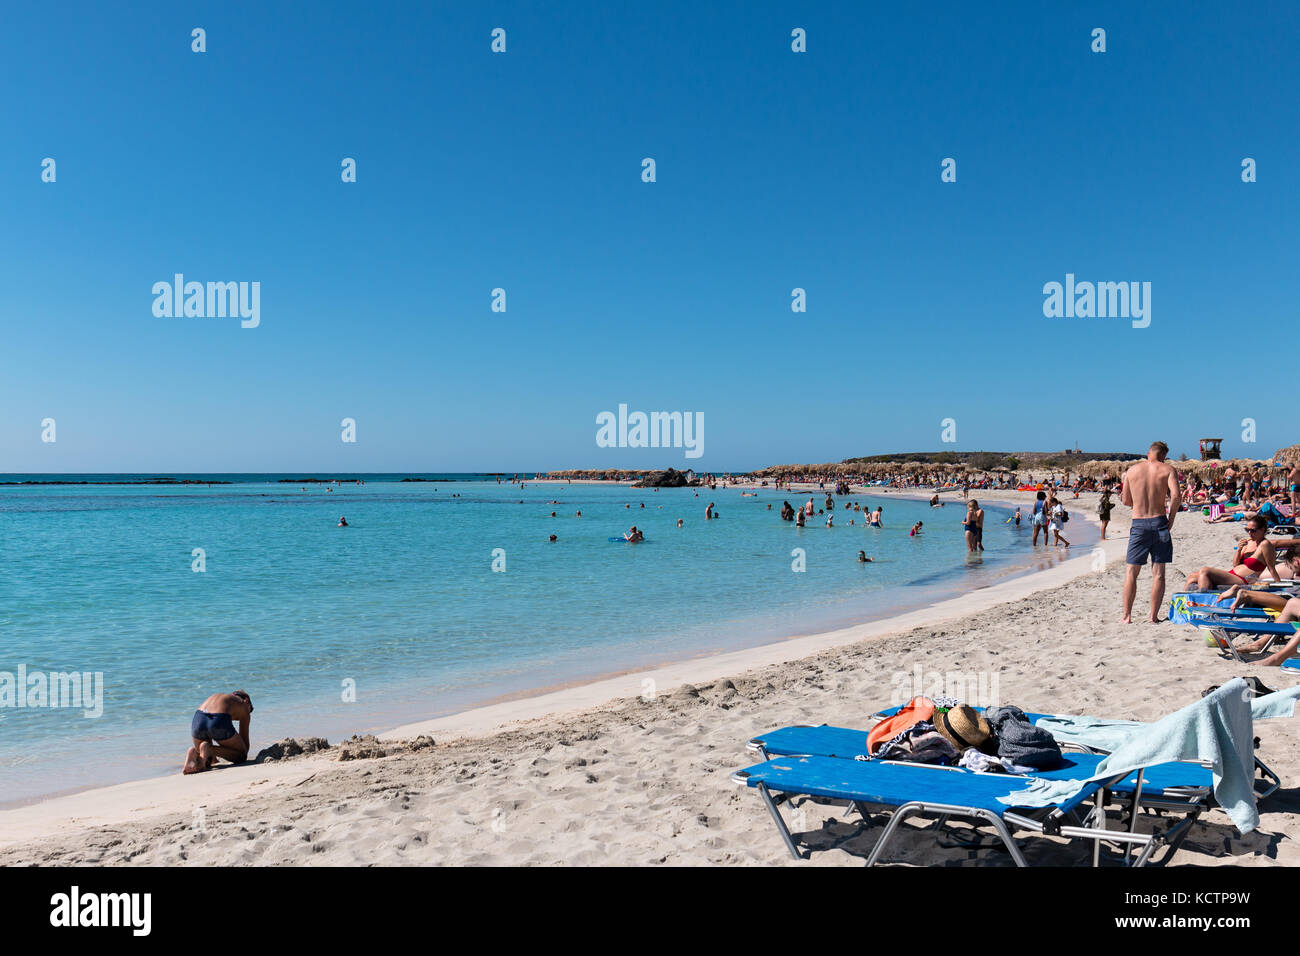 October 1st, 2017, Elafonissi, Greece - Elafonissi beach, located close to the southwestern corner of the Mediterranean island of Crete in the regiona Stock Photo